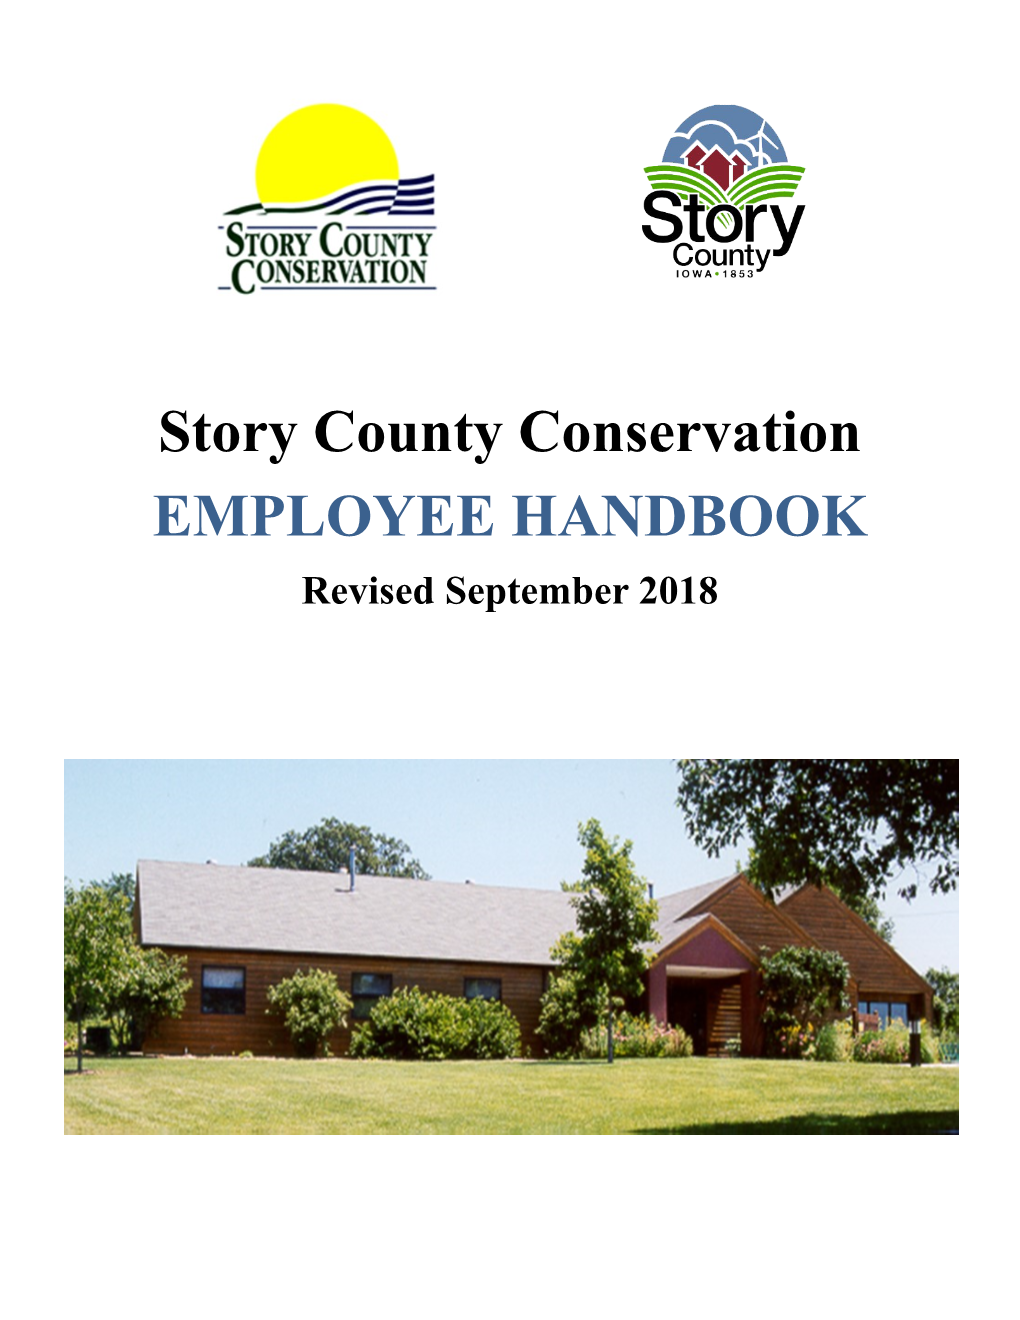 Story County Conservation EMPLOYEE HANDBOOK Revised September 2018 Dear Story County Conservation Employee